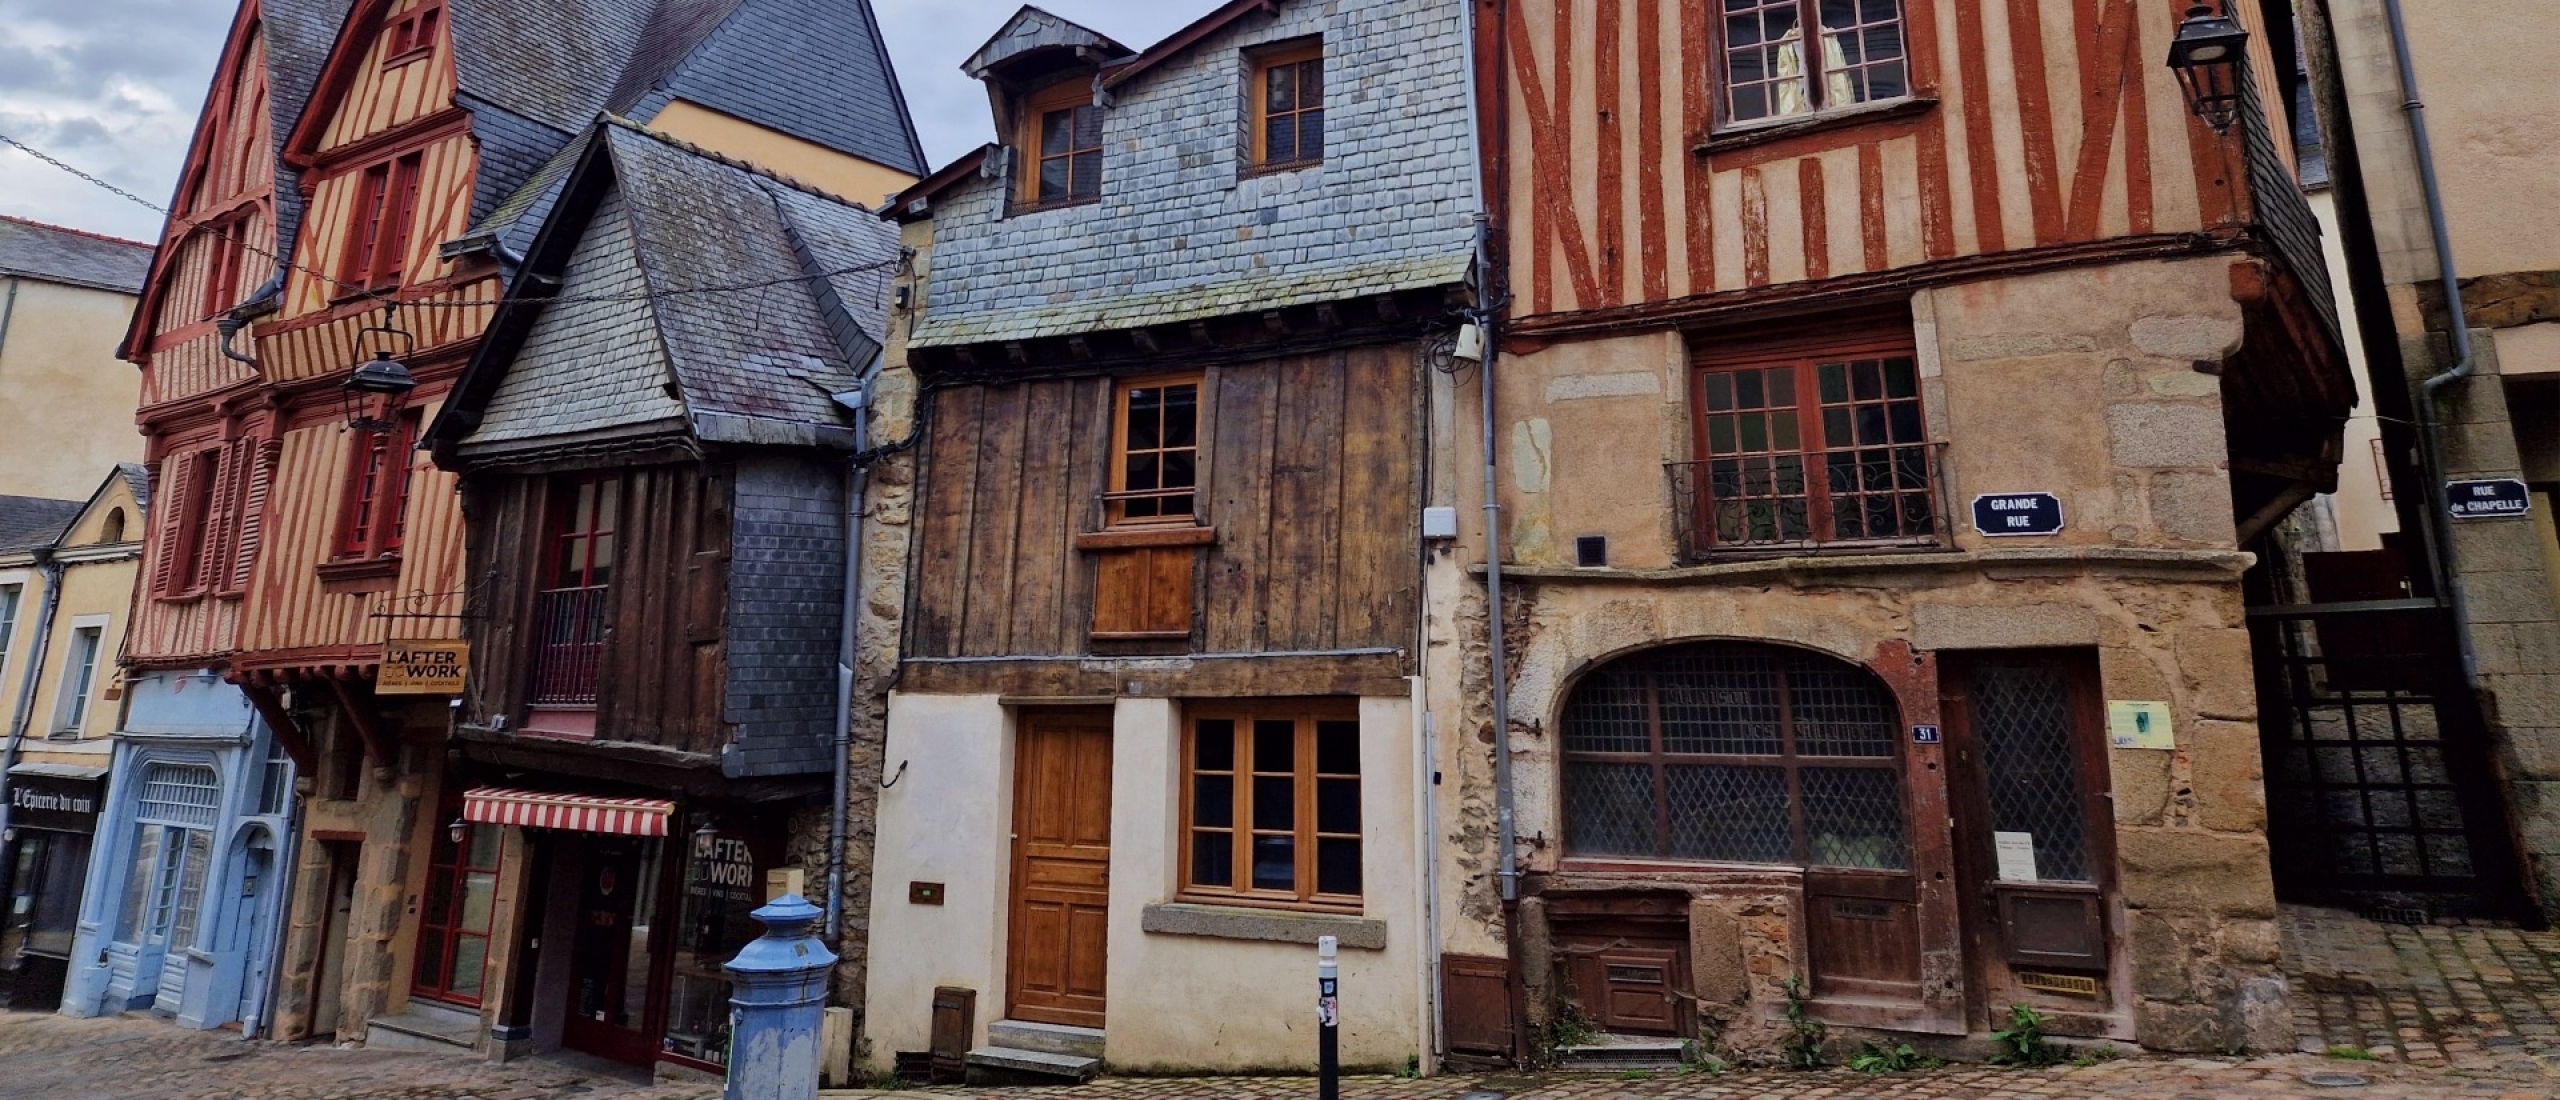 Laval Mayenne stad Frankrijk